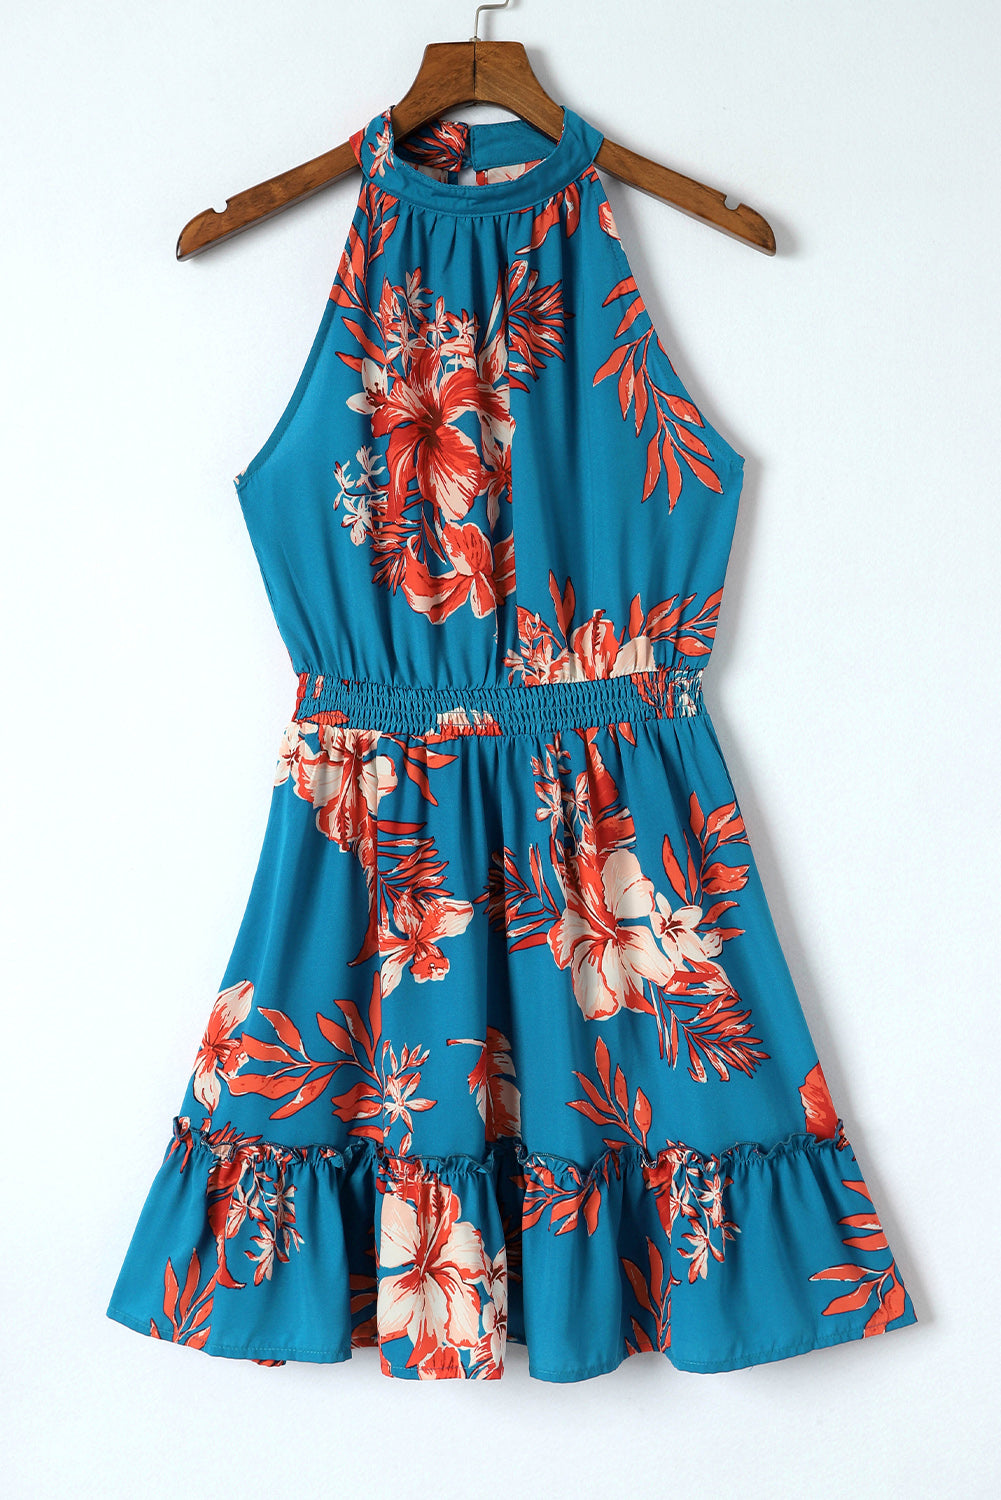 Charming Sky Blue Floral Print Sleeveless Ruffled Mini Dress